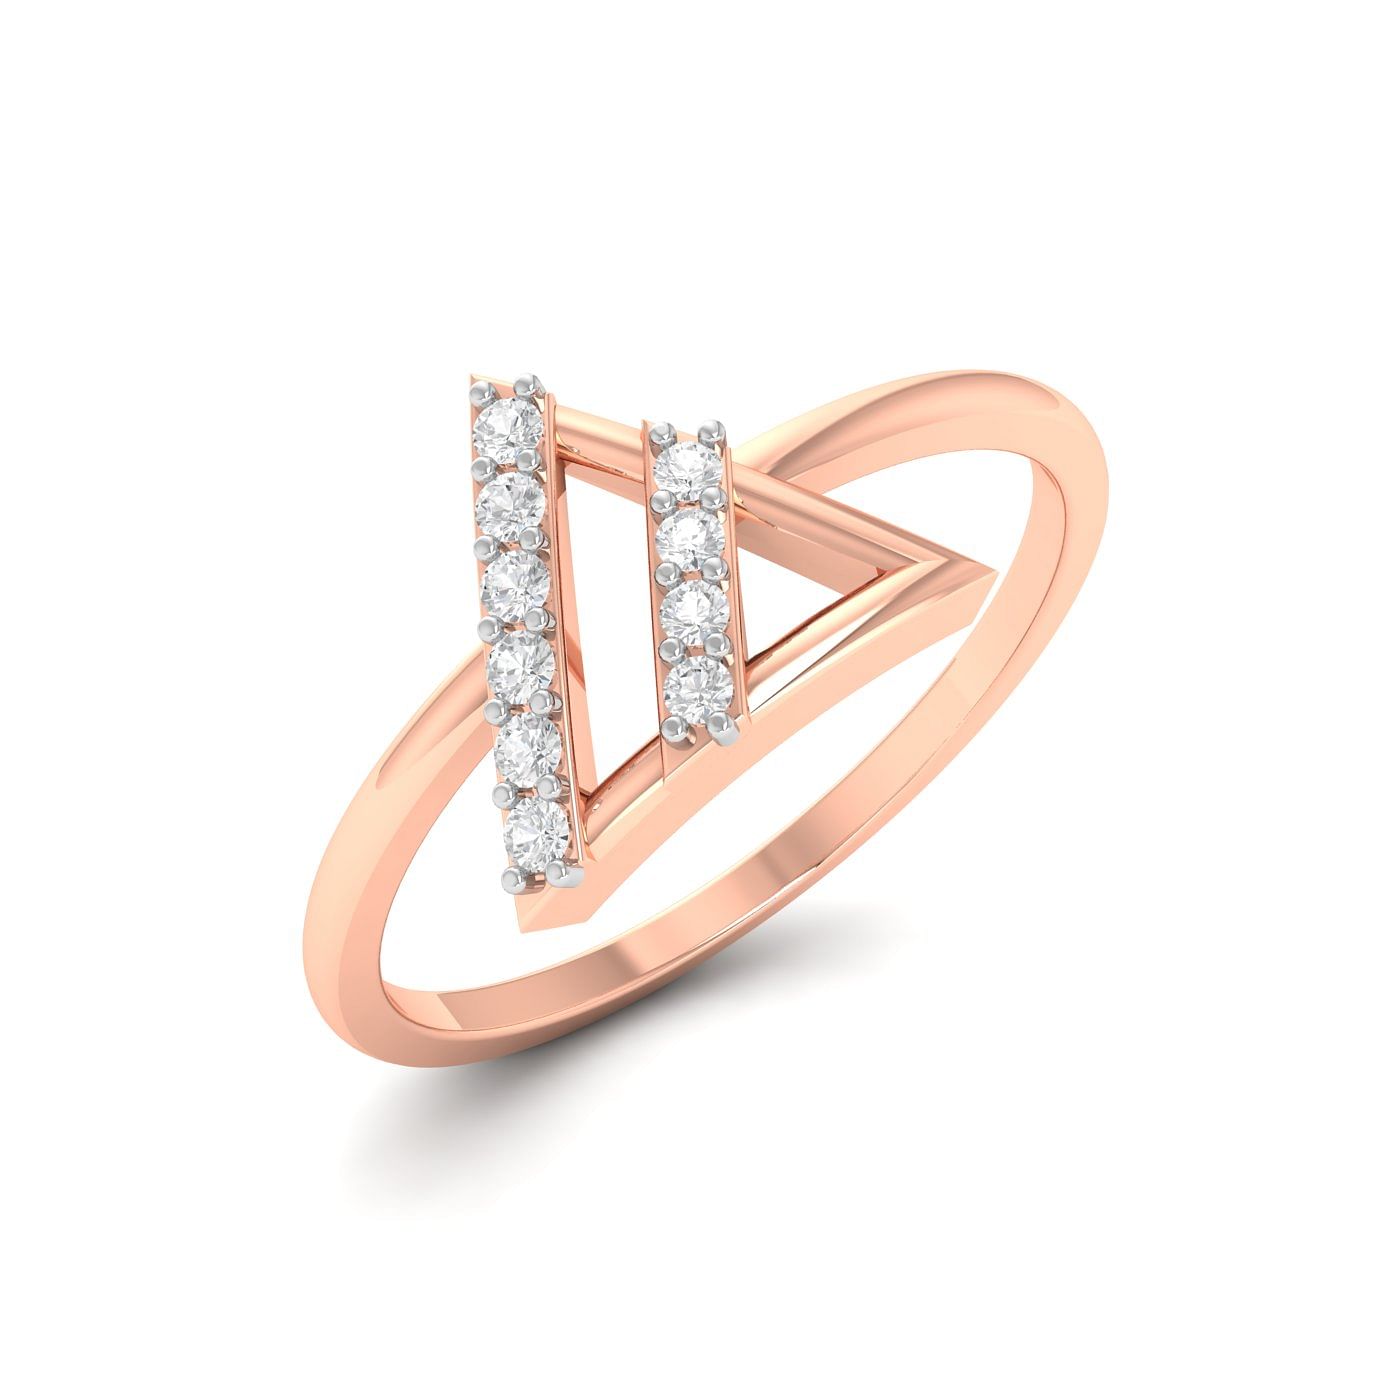 Gia 0.42ct Fancy Light Pink Diamonds Solid 18k Gold Female's Diamond  Wedding Engagement Rings For Women - Rings - AliExpress